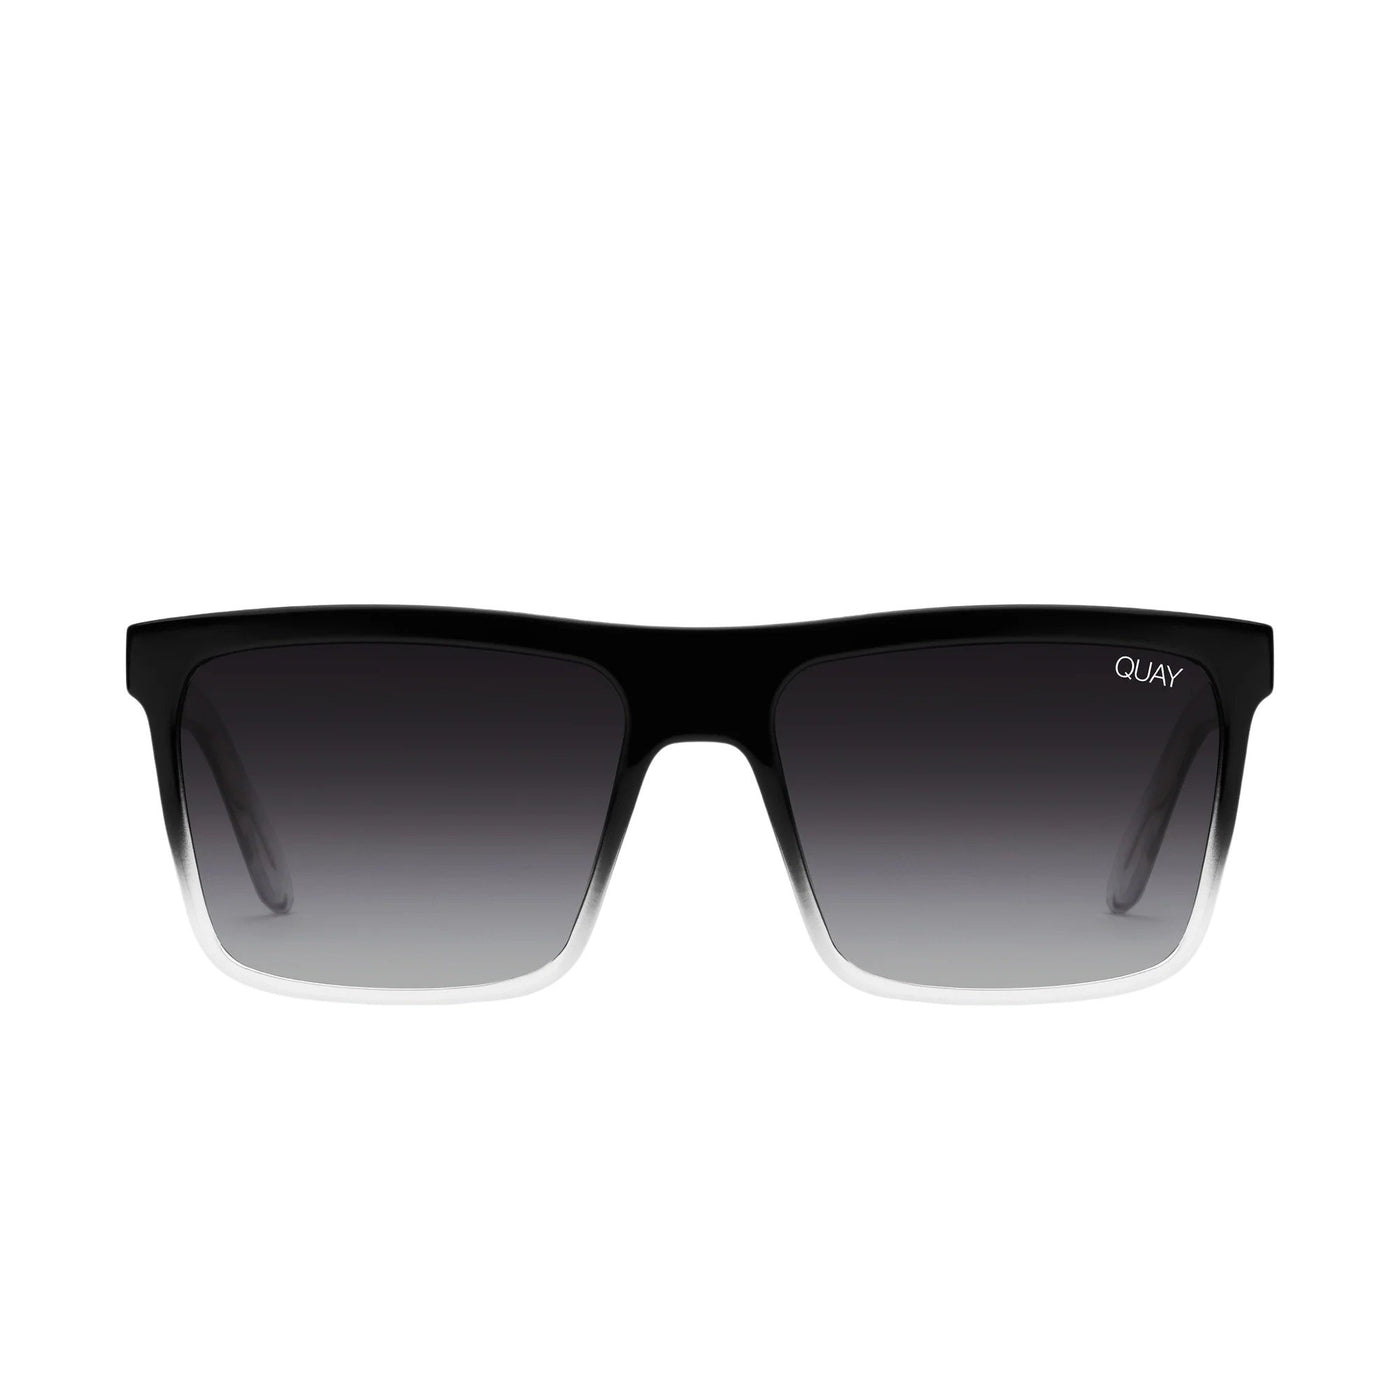 Quay Unisex Let It Run Oversized Square Sunglasses (Black Clear Frame/Smoke Polarized Lens) - front